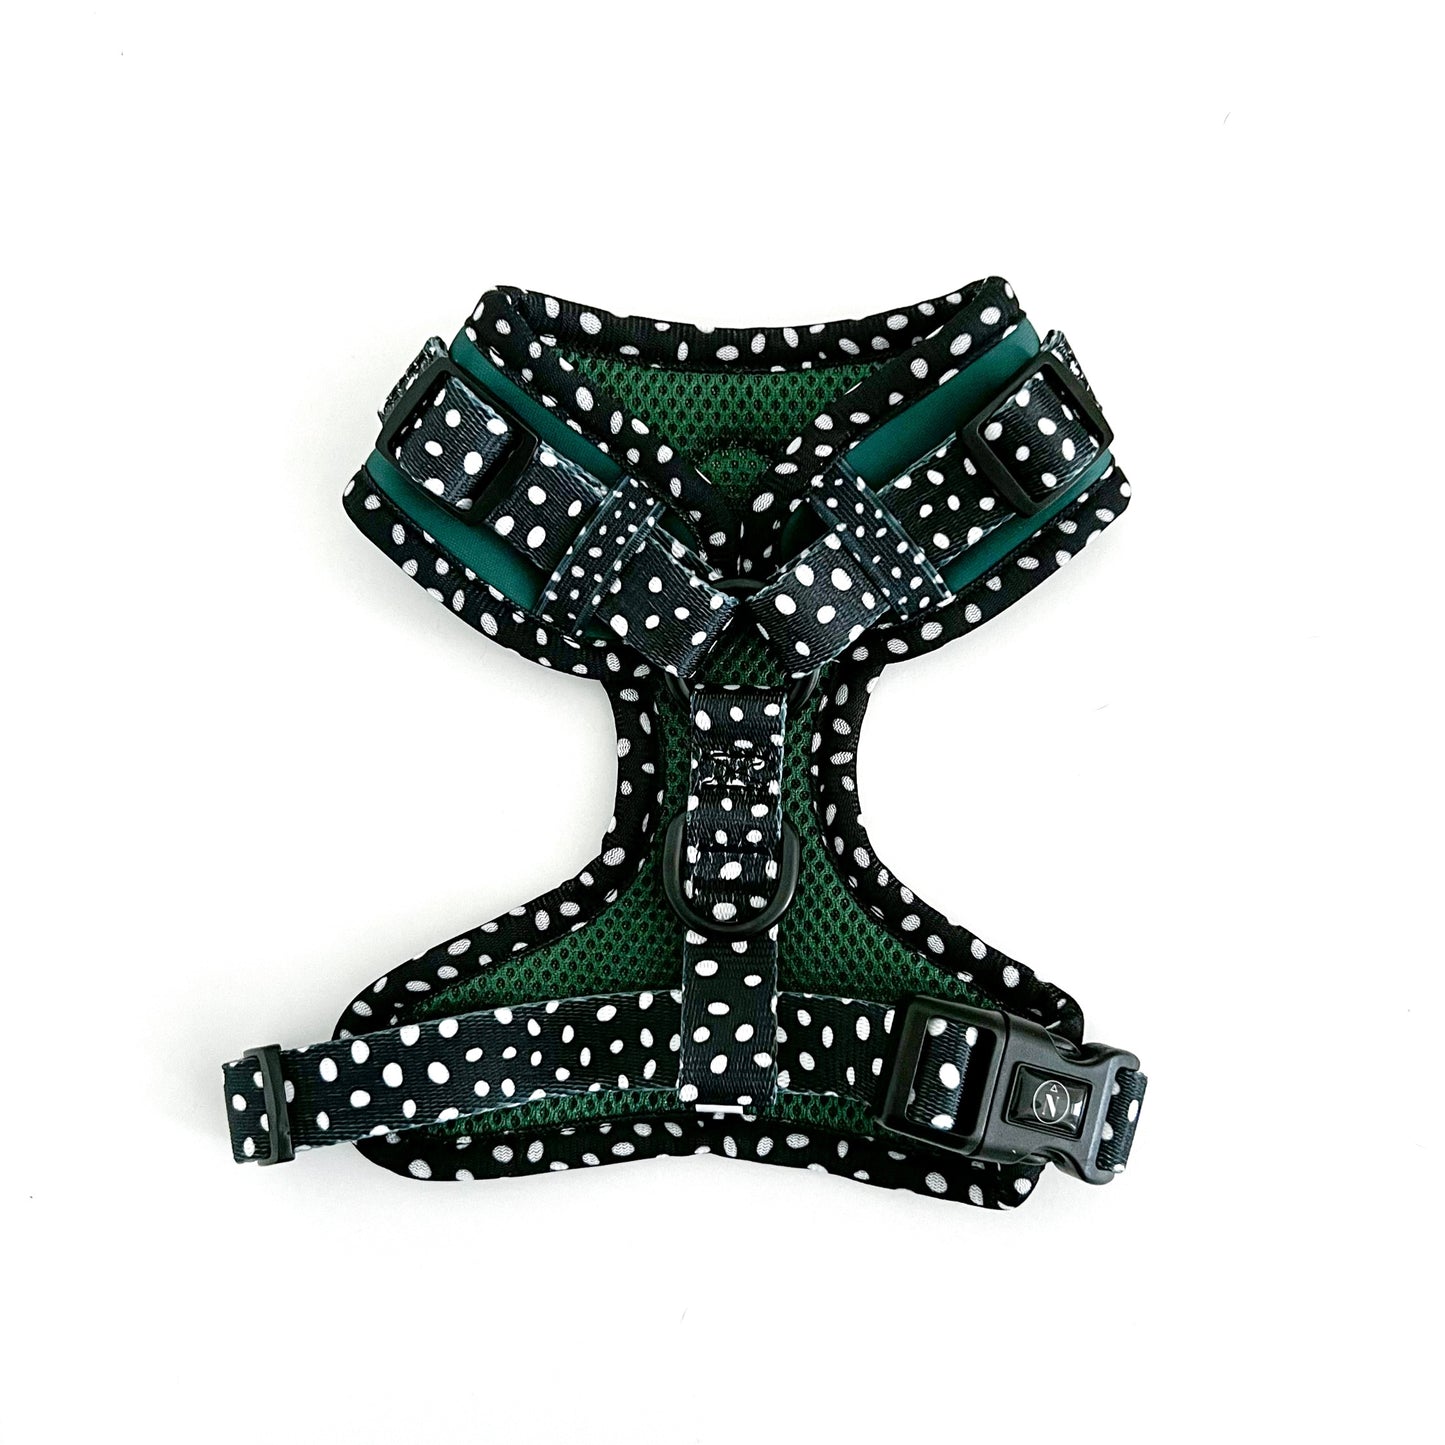 Adjustable Harness - Speckled Emerald